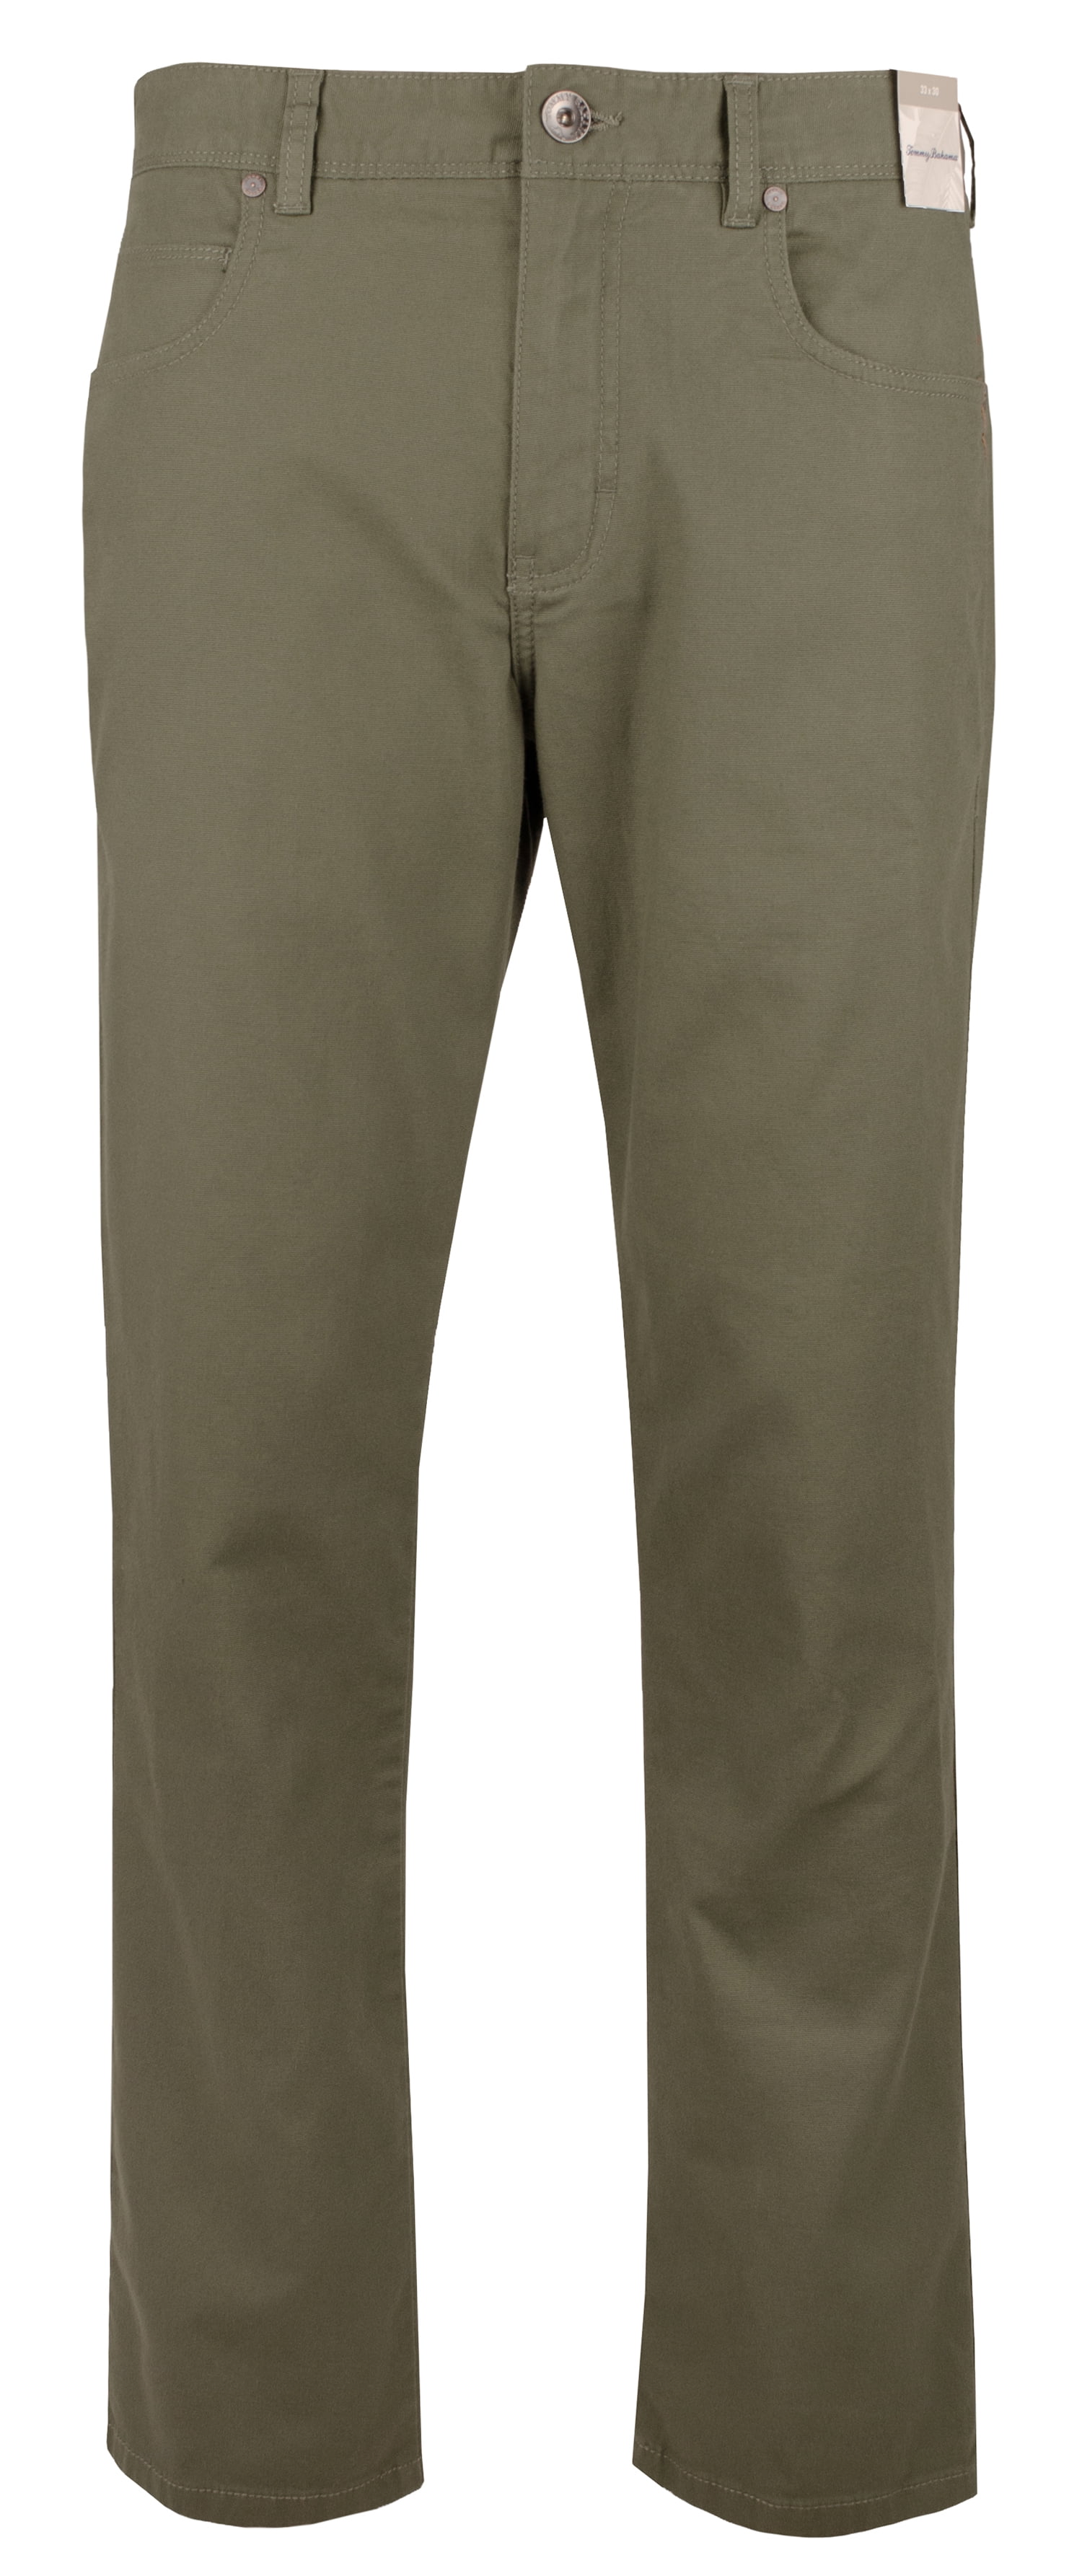 Men's Key Isles 5-Pocket Stretch Pants-BG-34X34 - Walmart.com